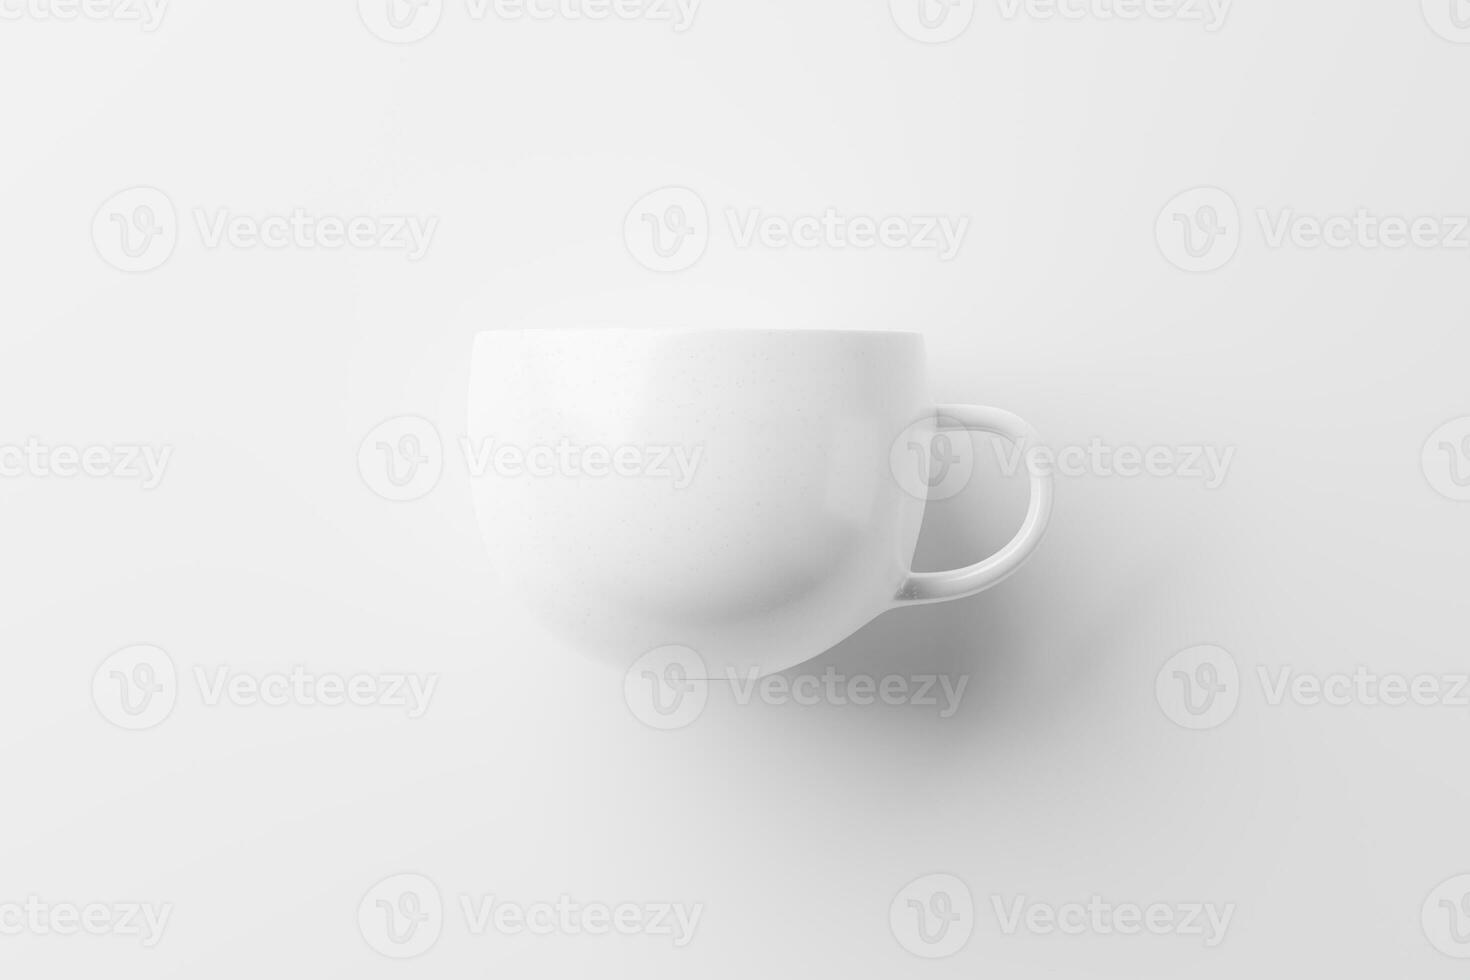 Ceramic Mug Cup For Coffee Tea White Blank 3D Rendering Mockup photo